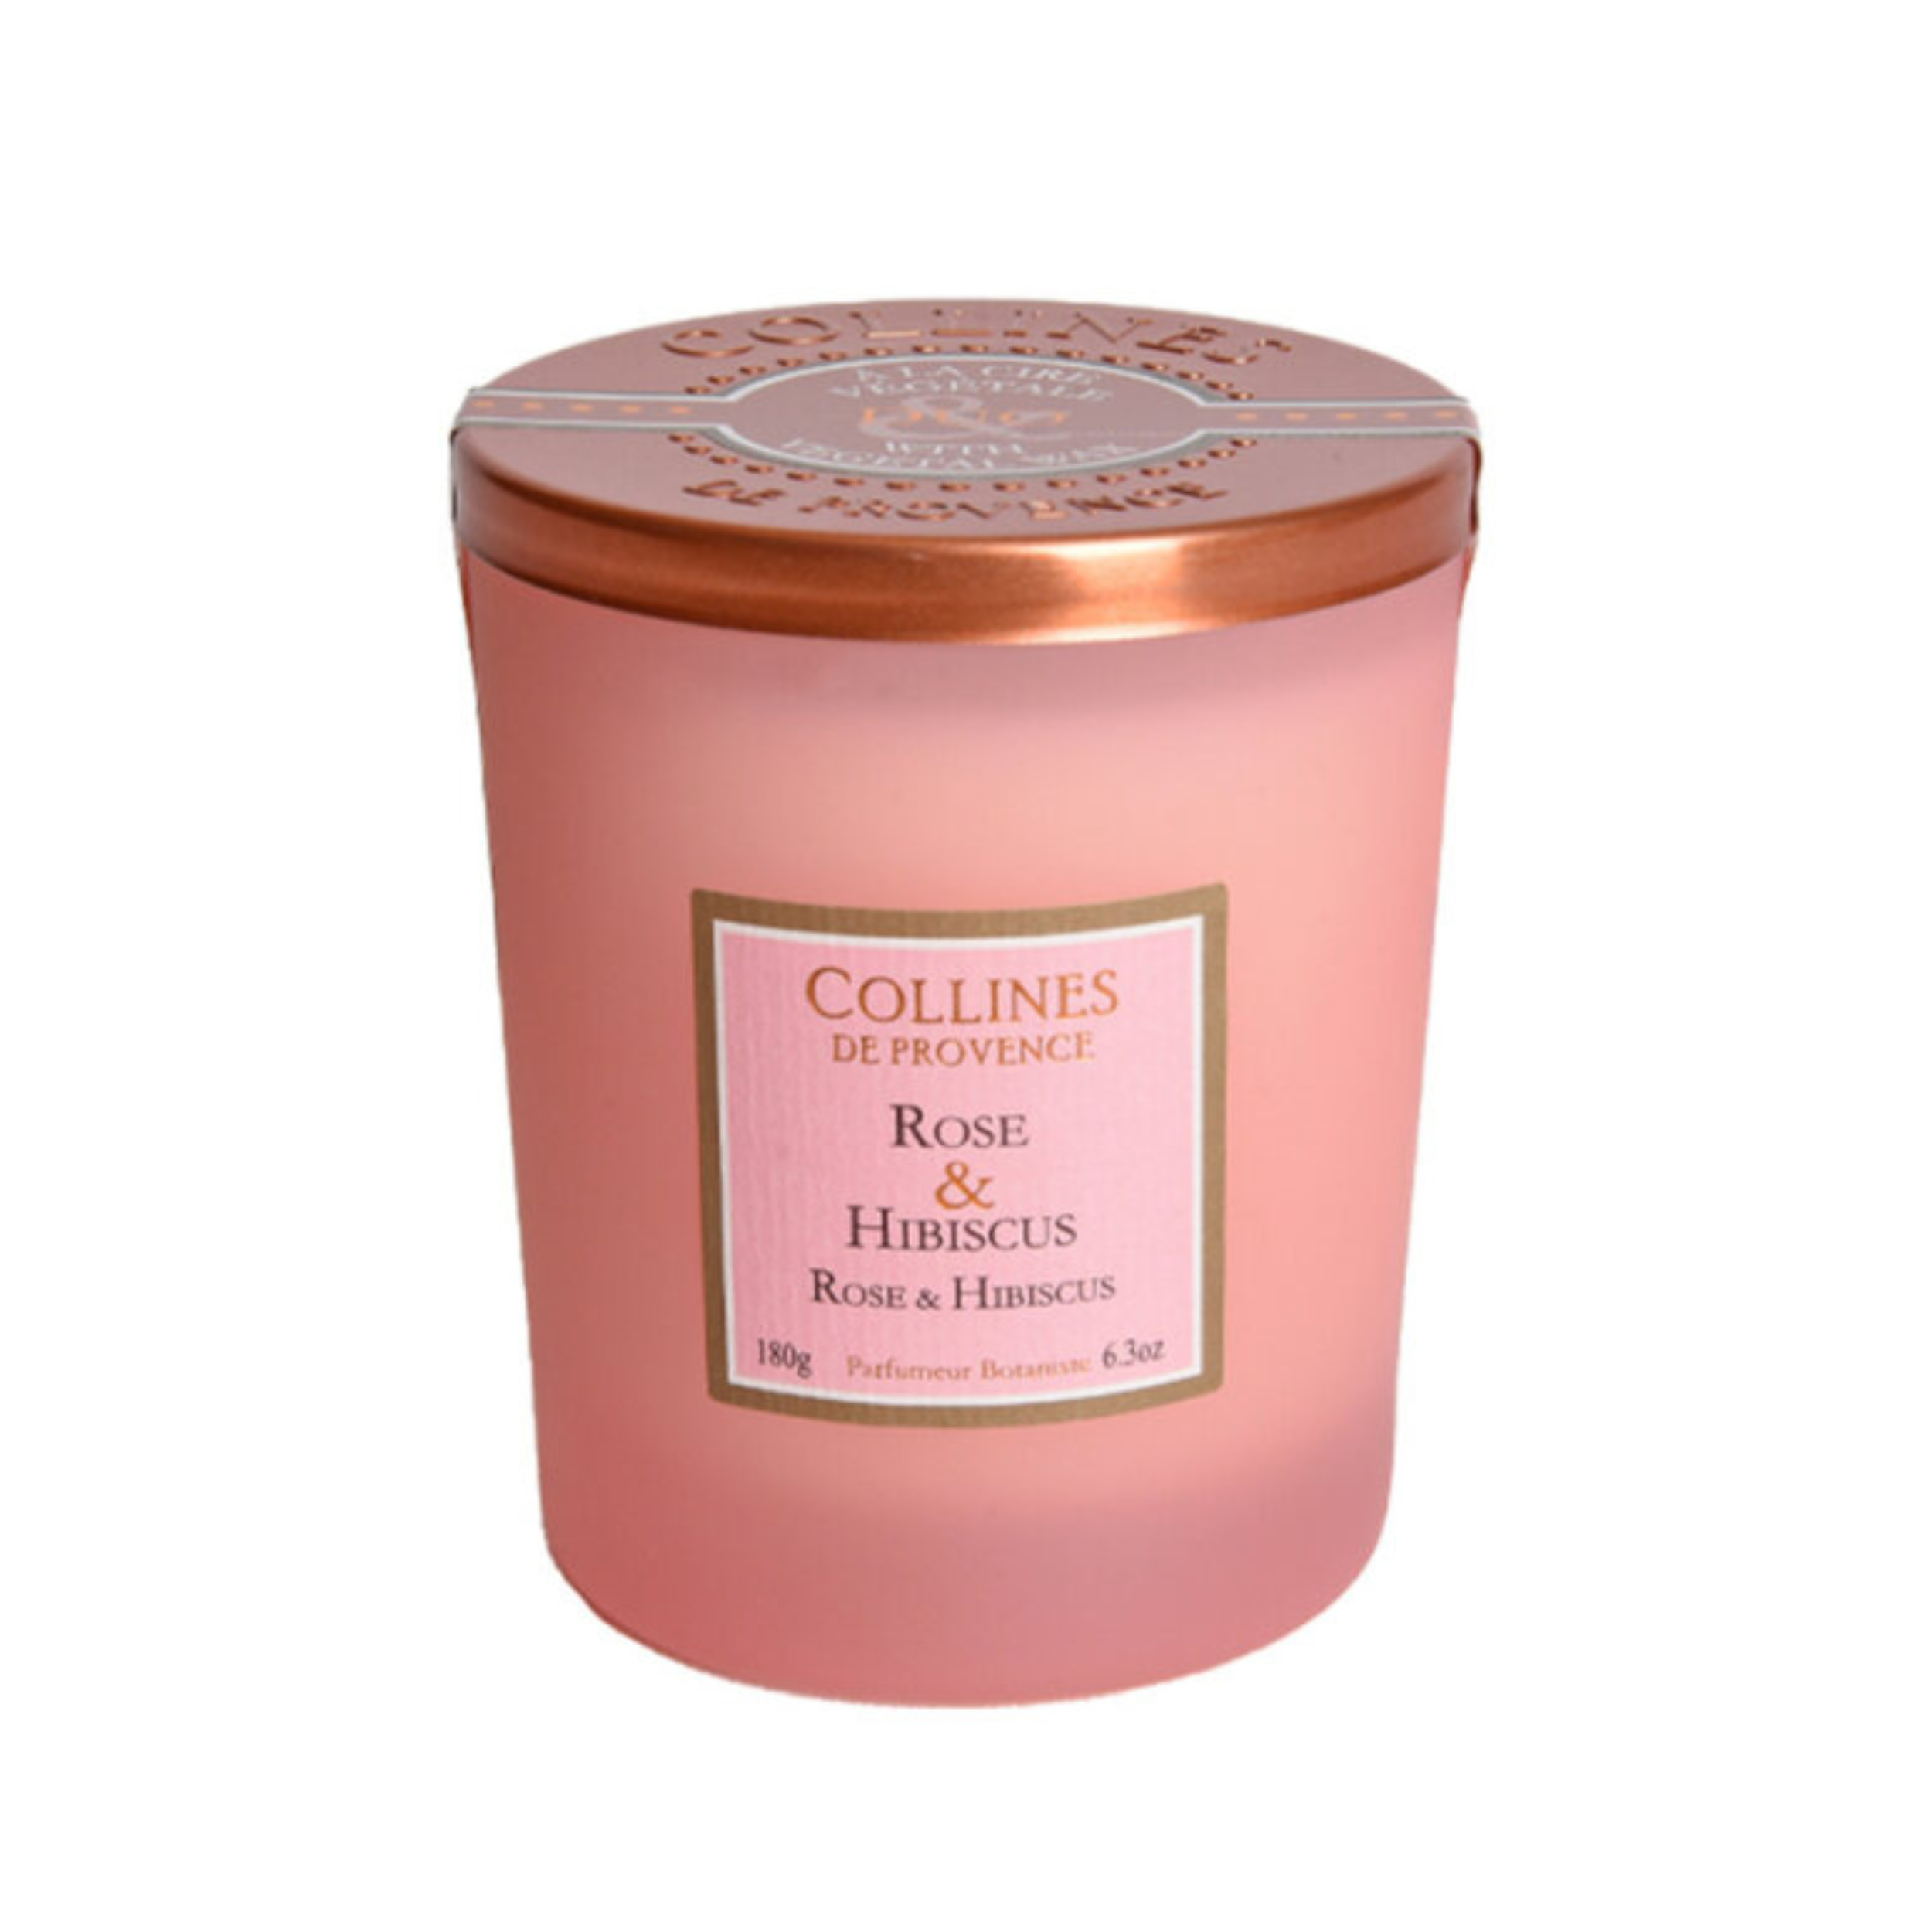 Collines de Provence Duftkerze "Rose & Hibiscus" 180g